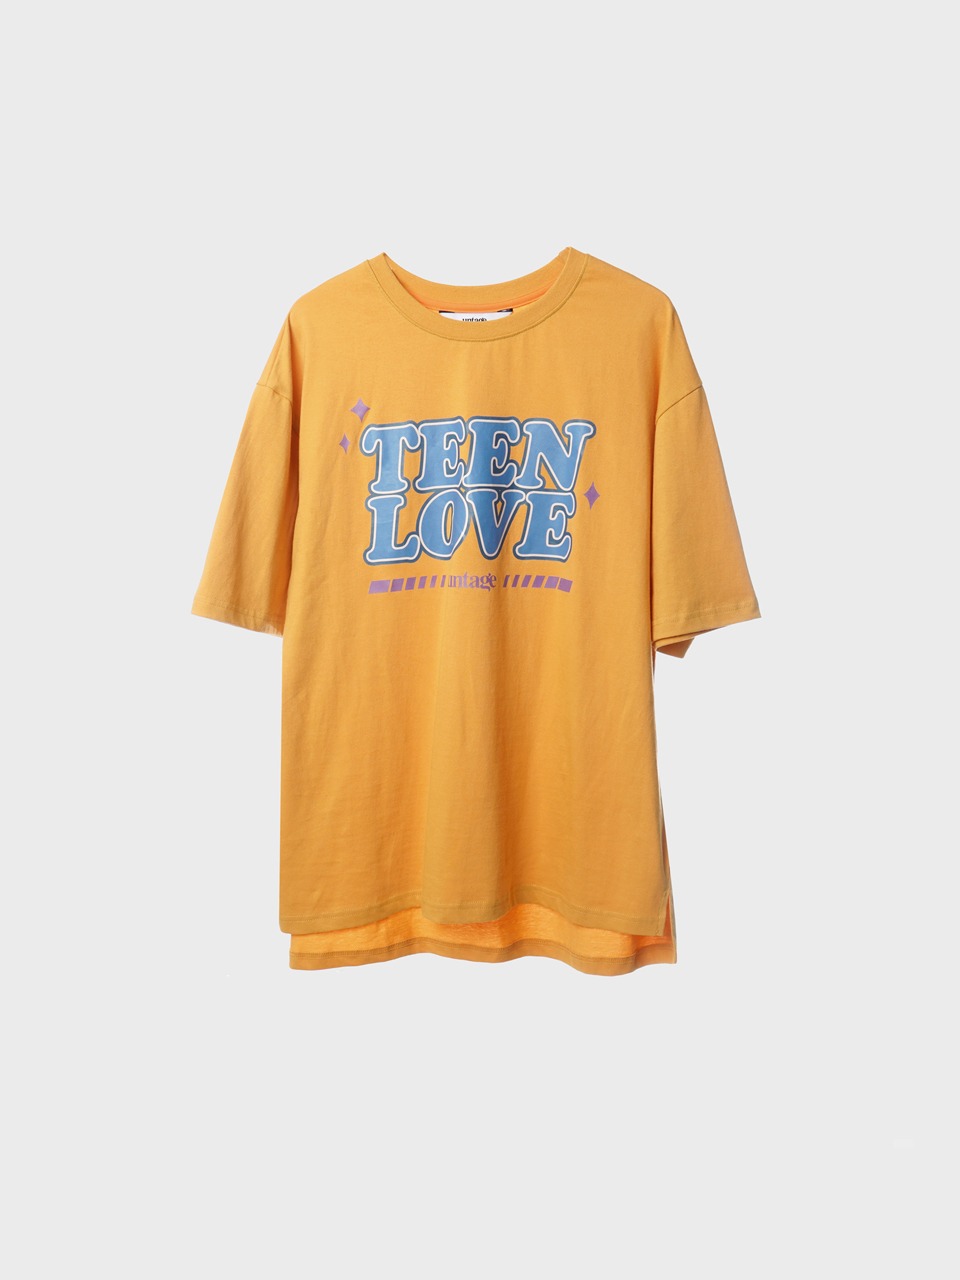 Retro Teen Love T-Shirts (yellow)